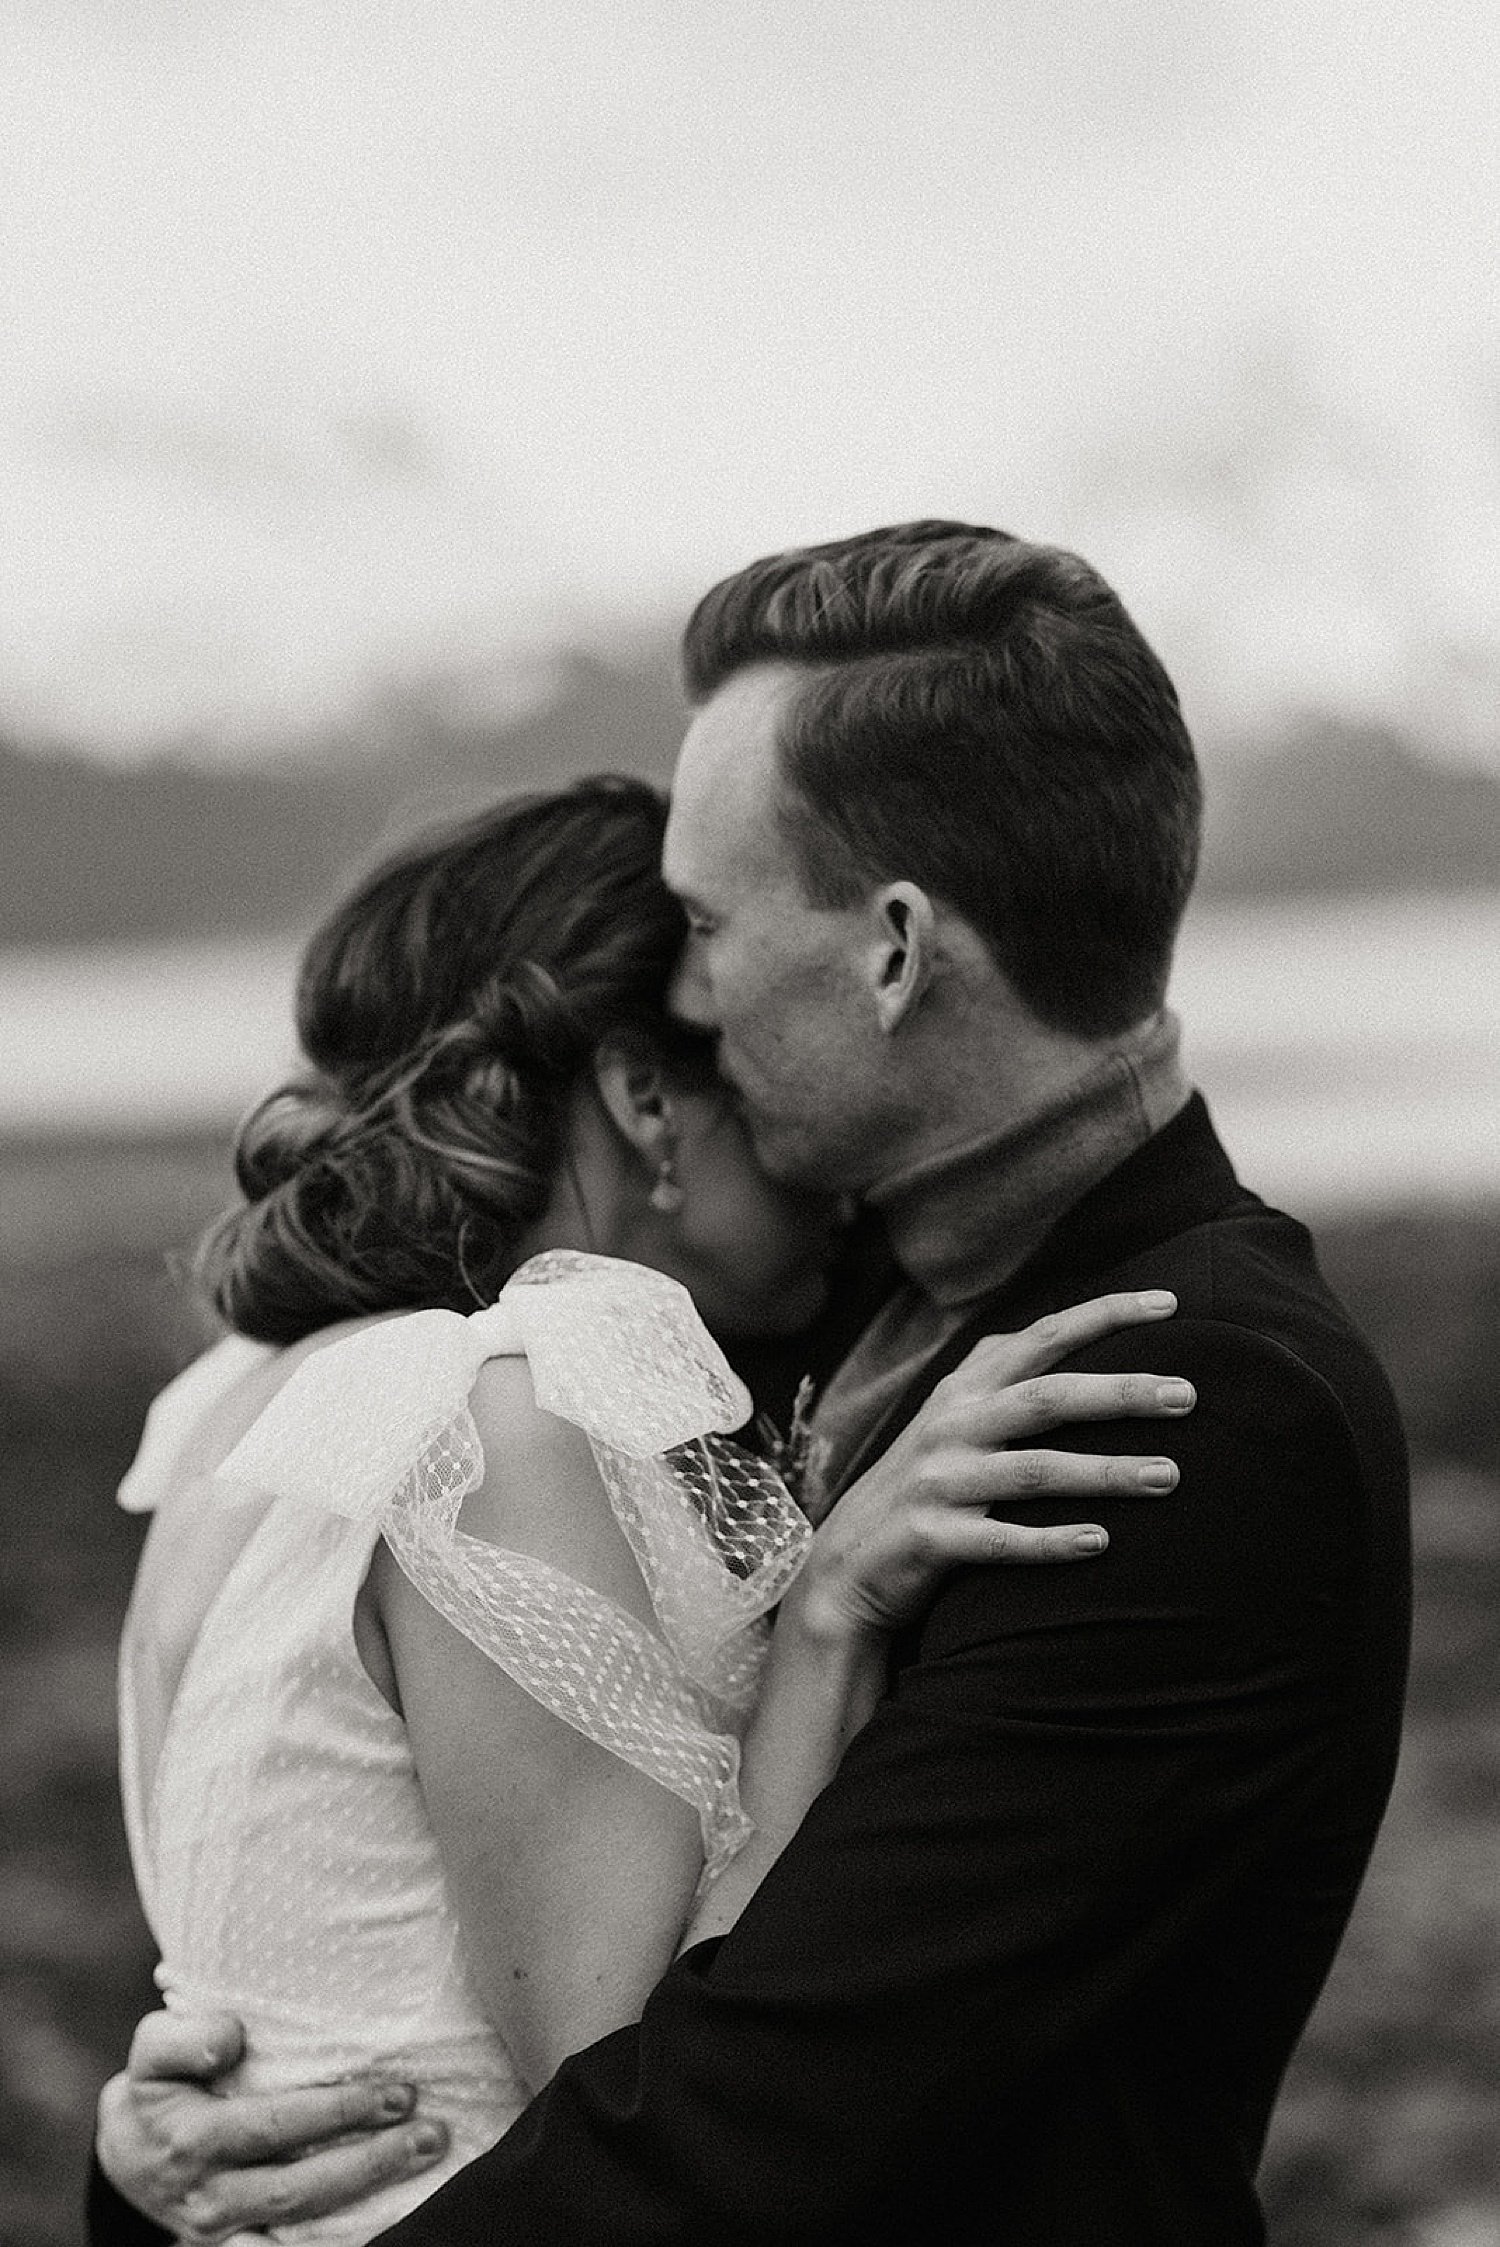  black and white wedding photo of bride and groom embracing at moody seward, alaska vintage styled shoot 